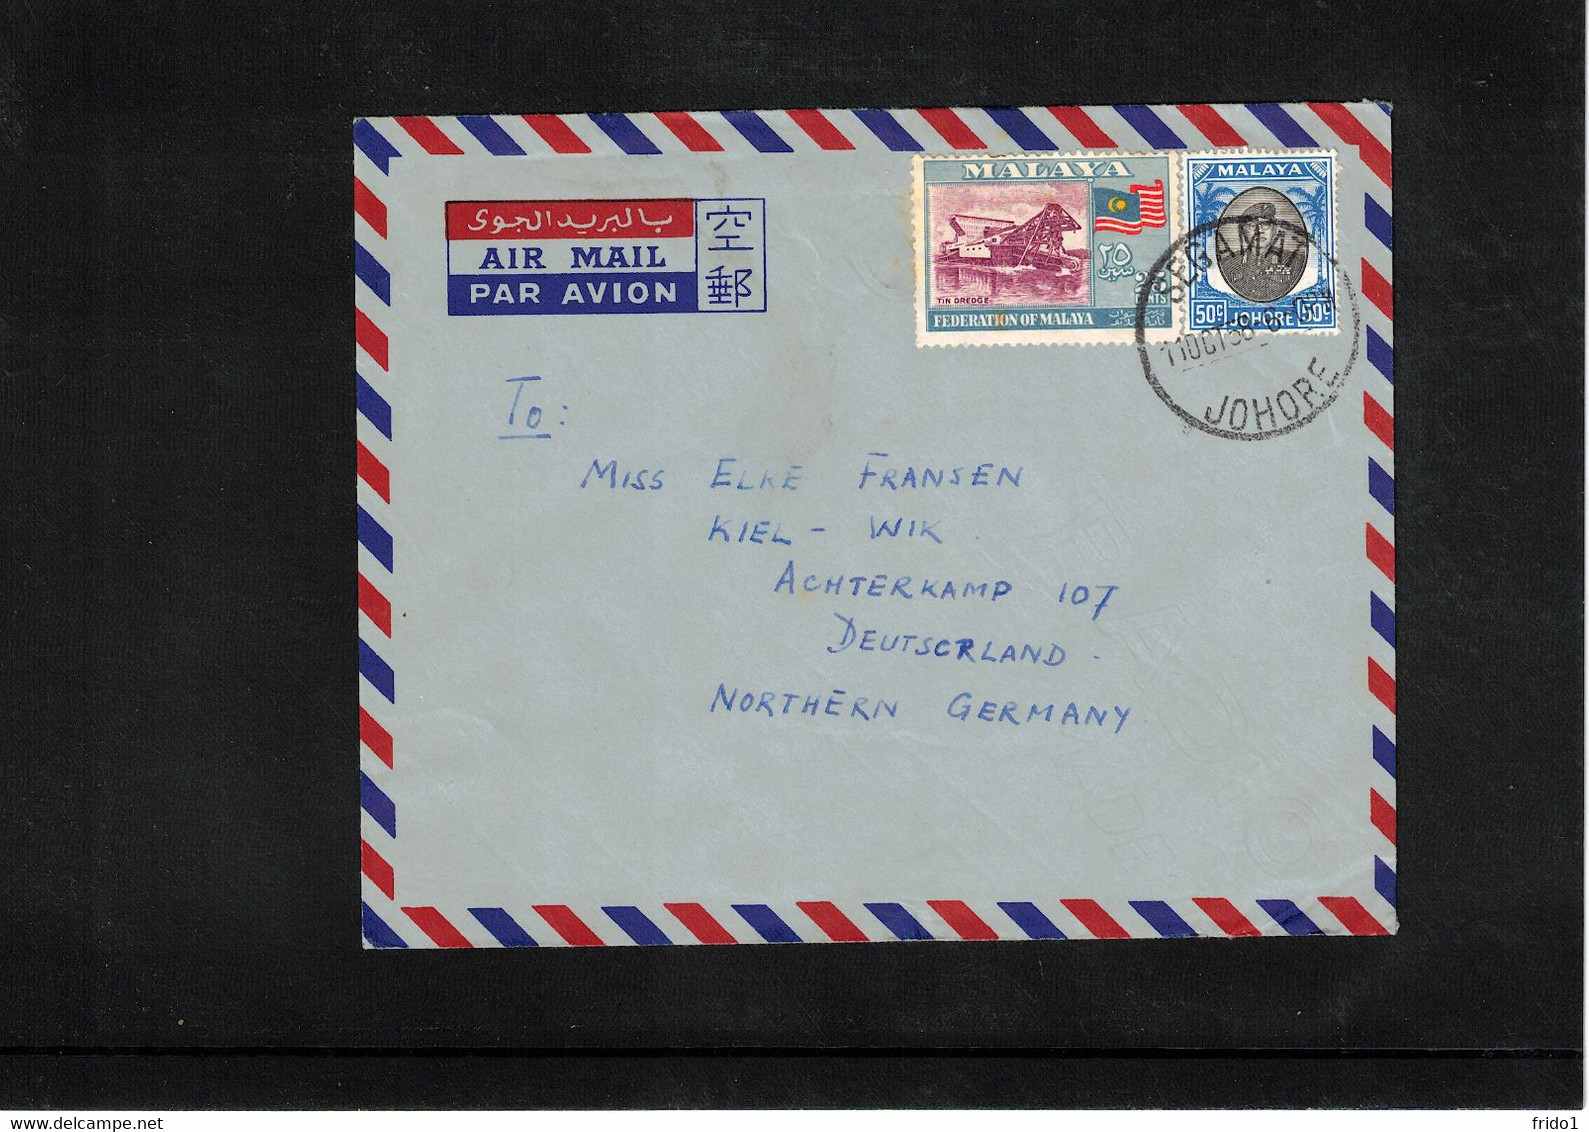 Malaysia Johore 1958 Interesting Airmail Letter To Germany - Johore